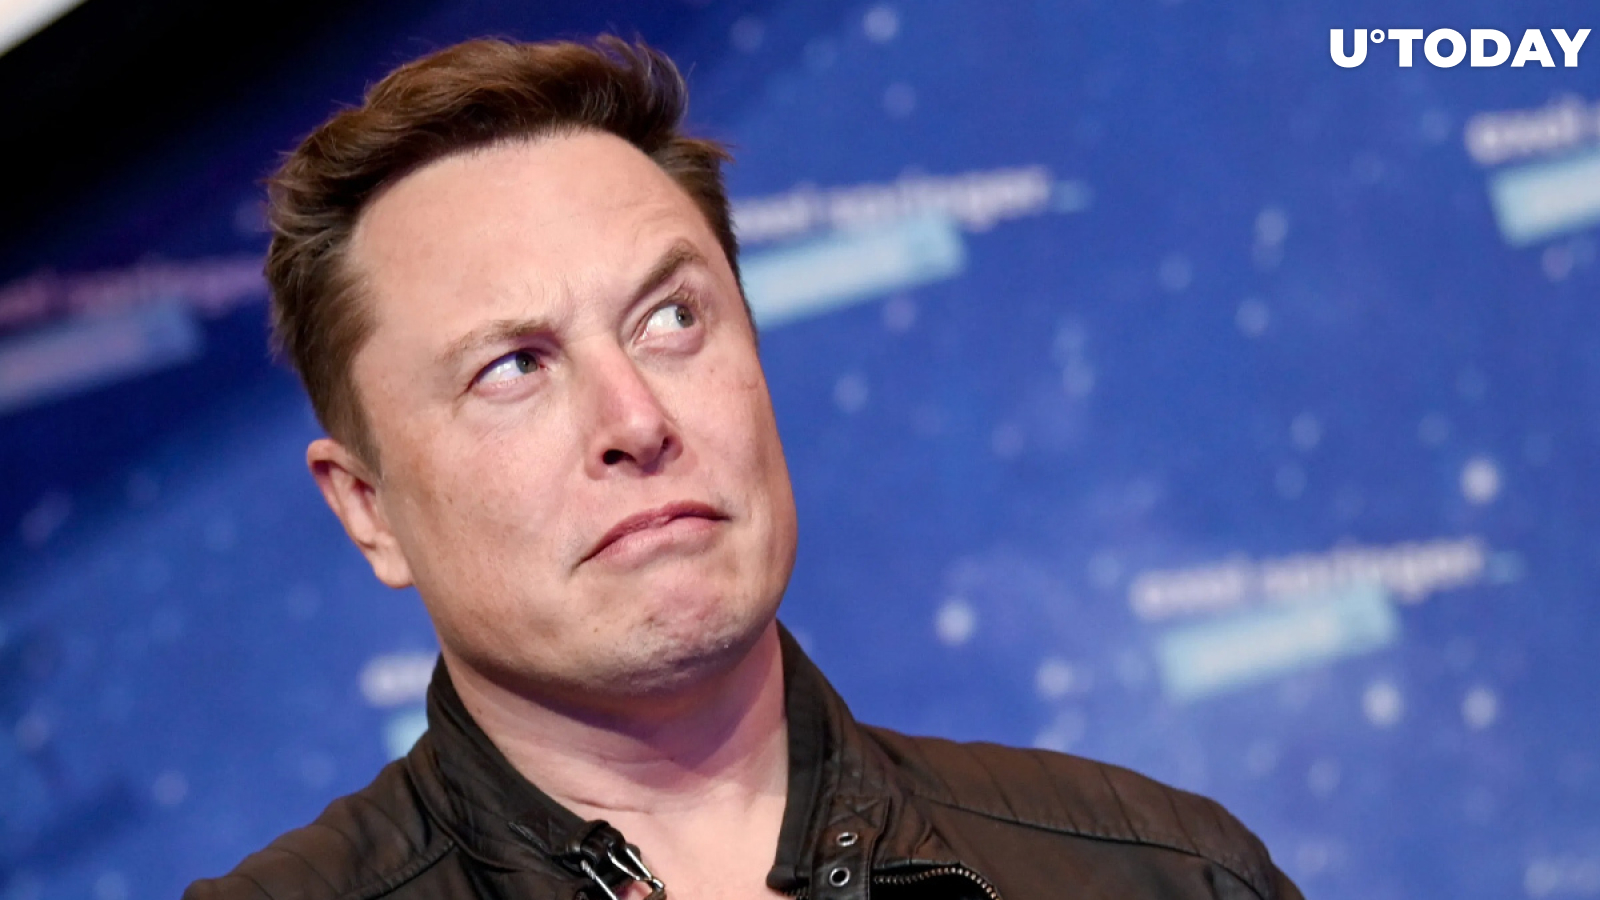 Elon Musk Facing $258 Billion Lawsuit for Promoting Dogecoin 